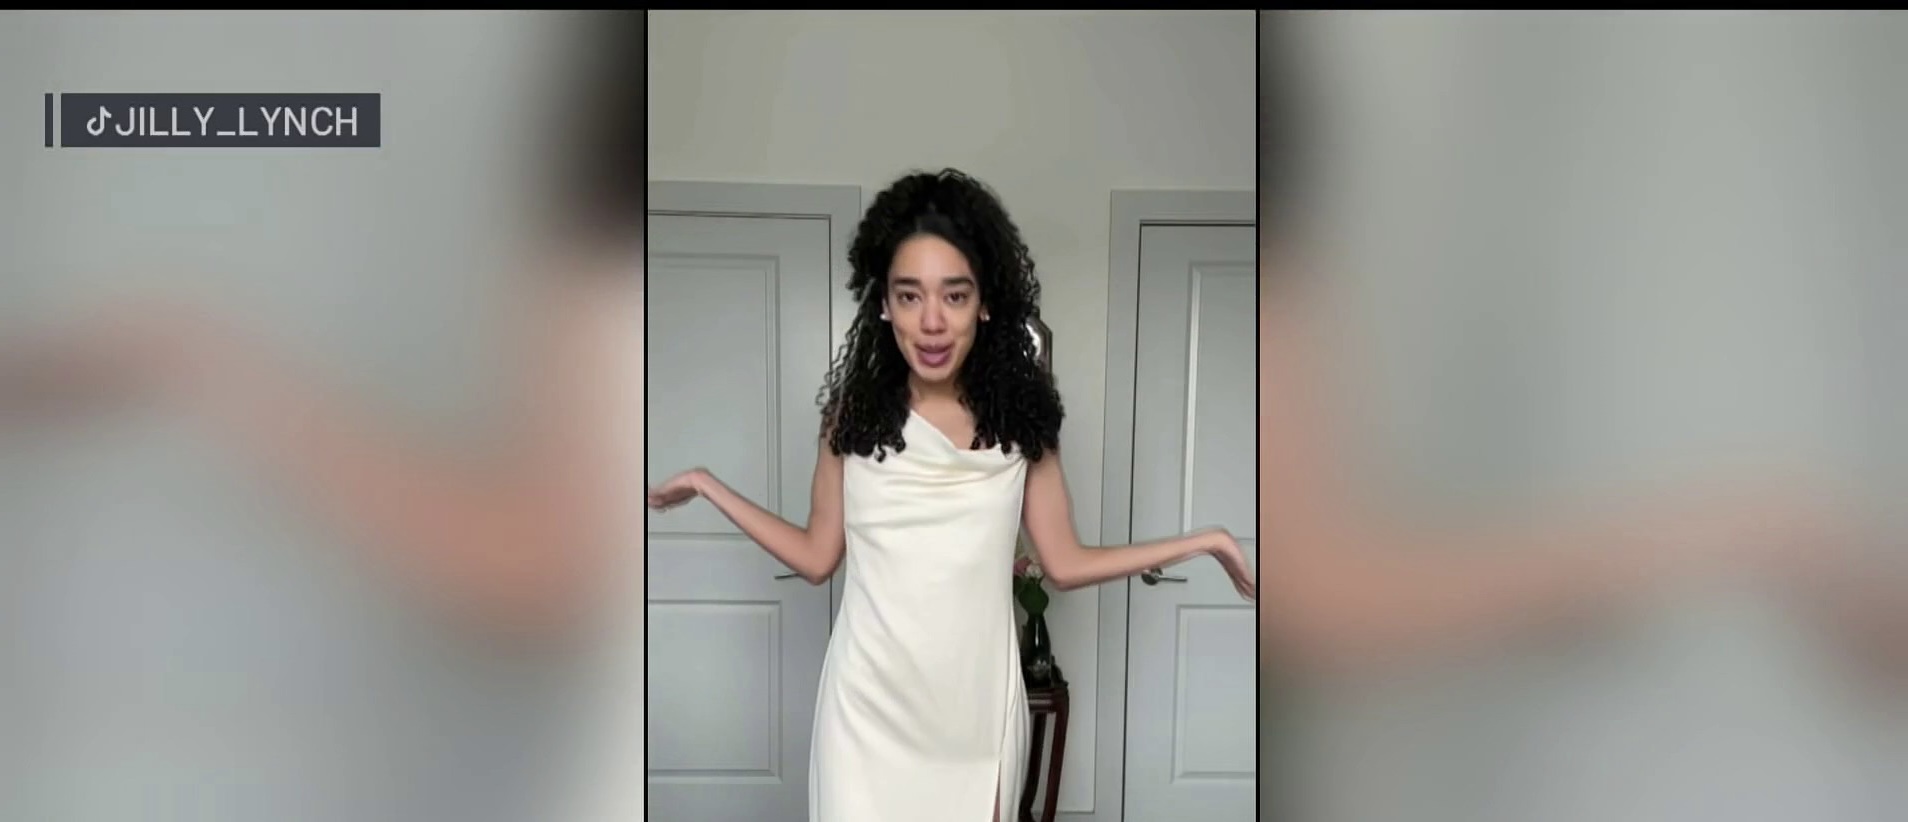 Ohio Woman's $3.75 Thrifted Wedding Dress Goes Viral on TikTok